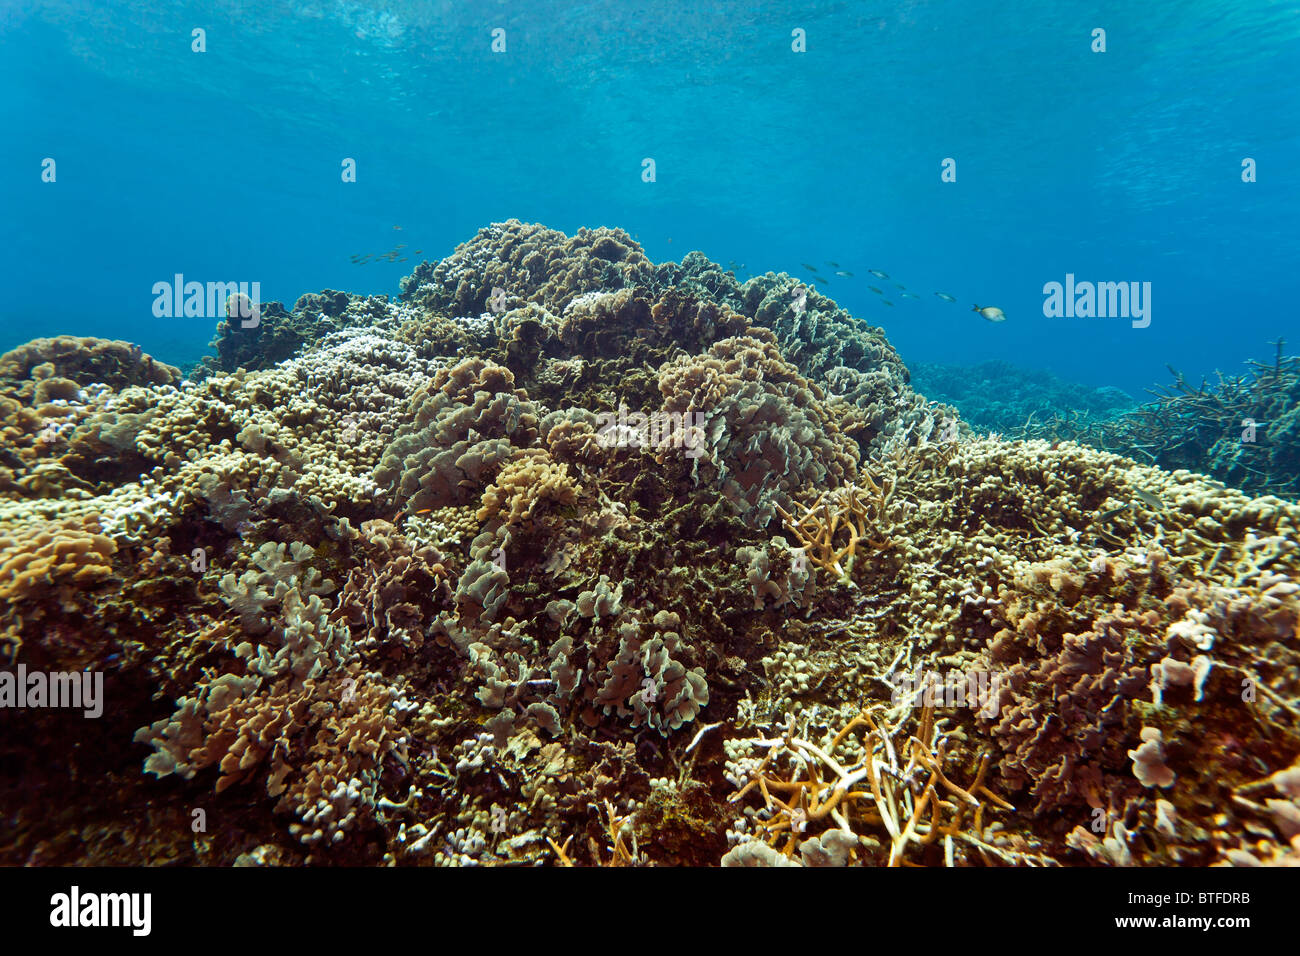 field of Thin leaf lettuce coral underwater off the coat of Roatan Honduras Stock Photo